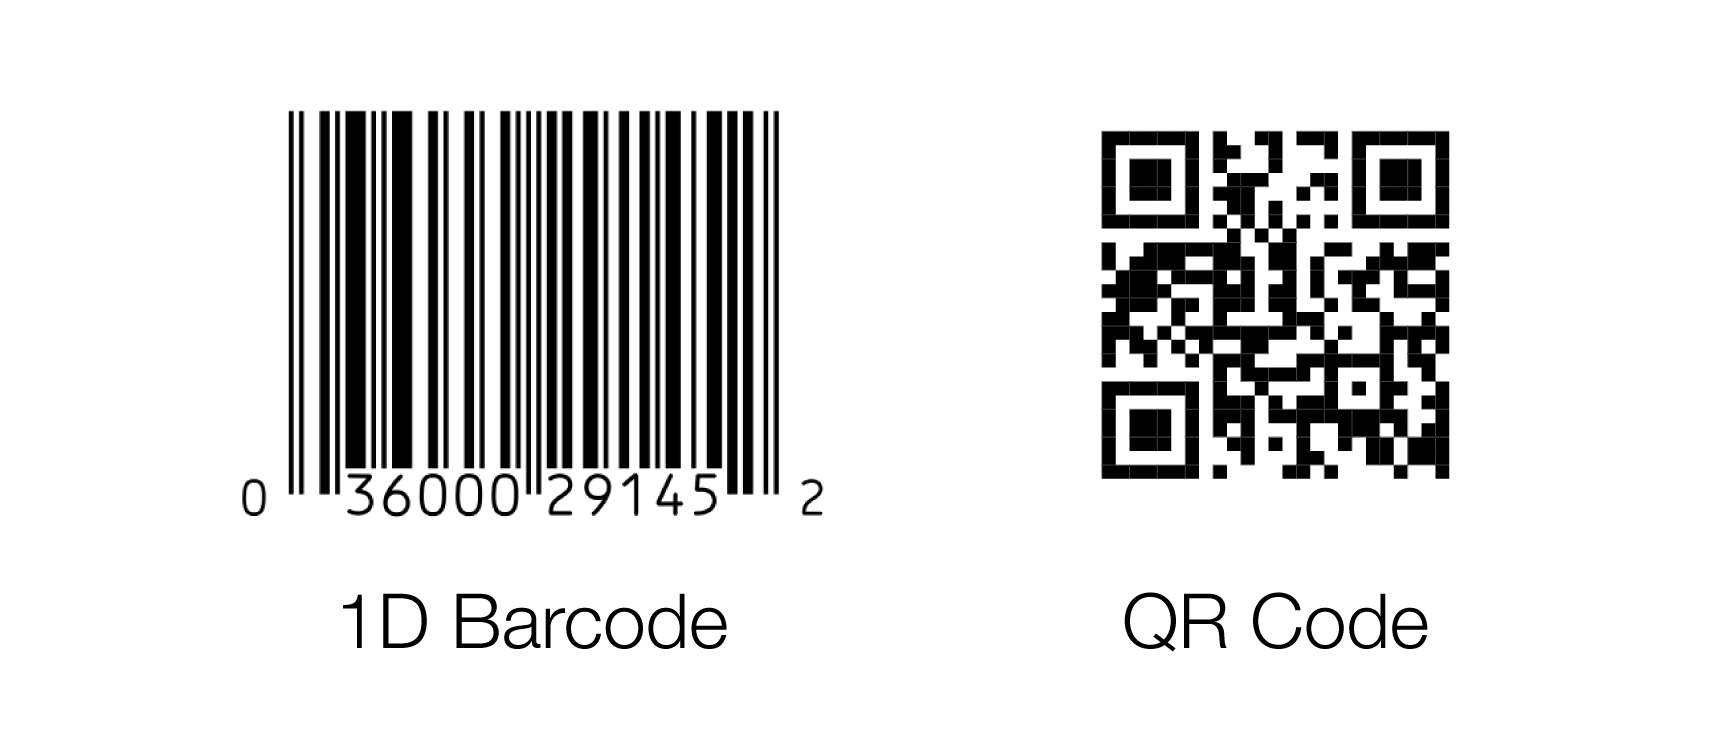 QR code vs Barcode